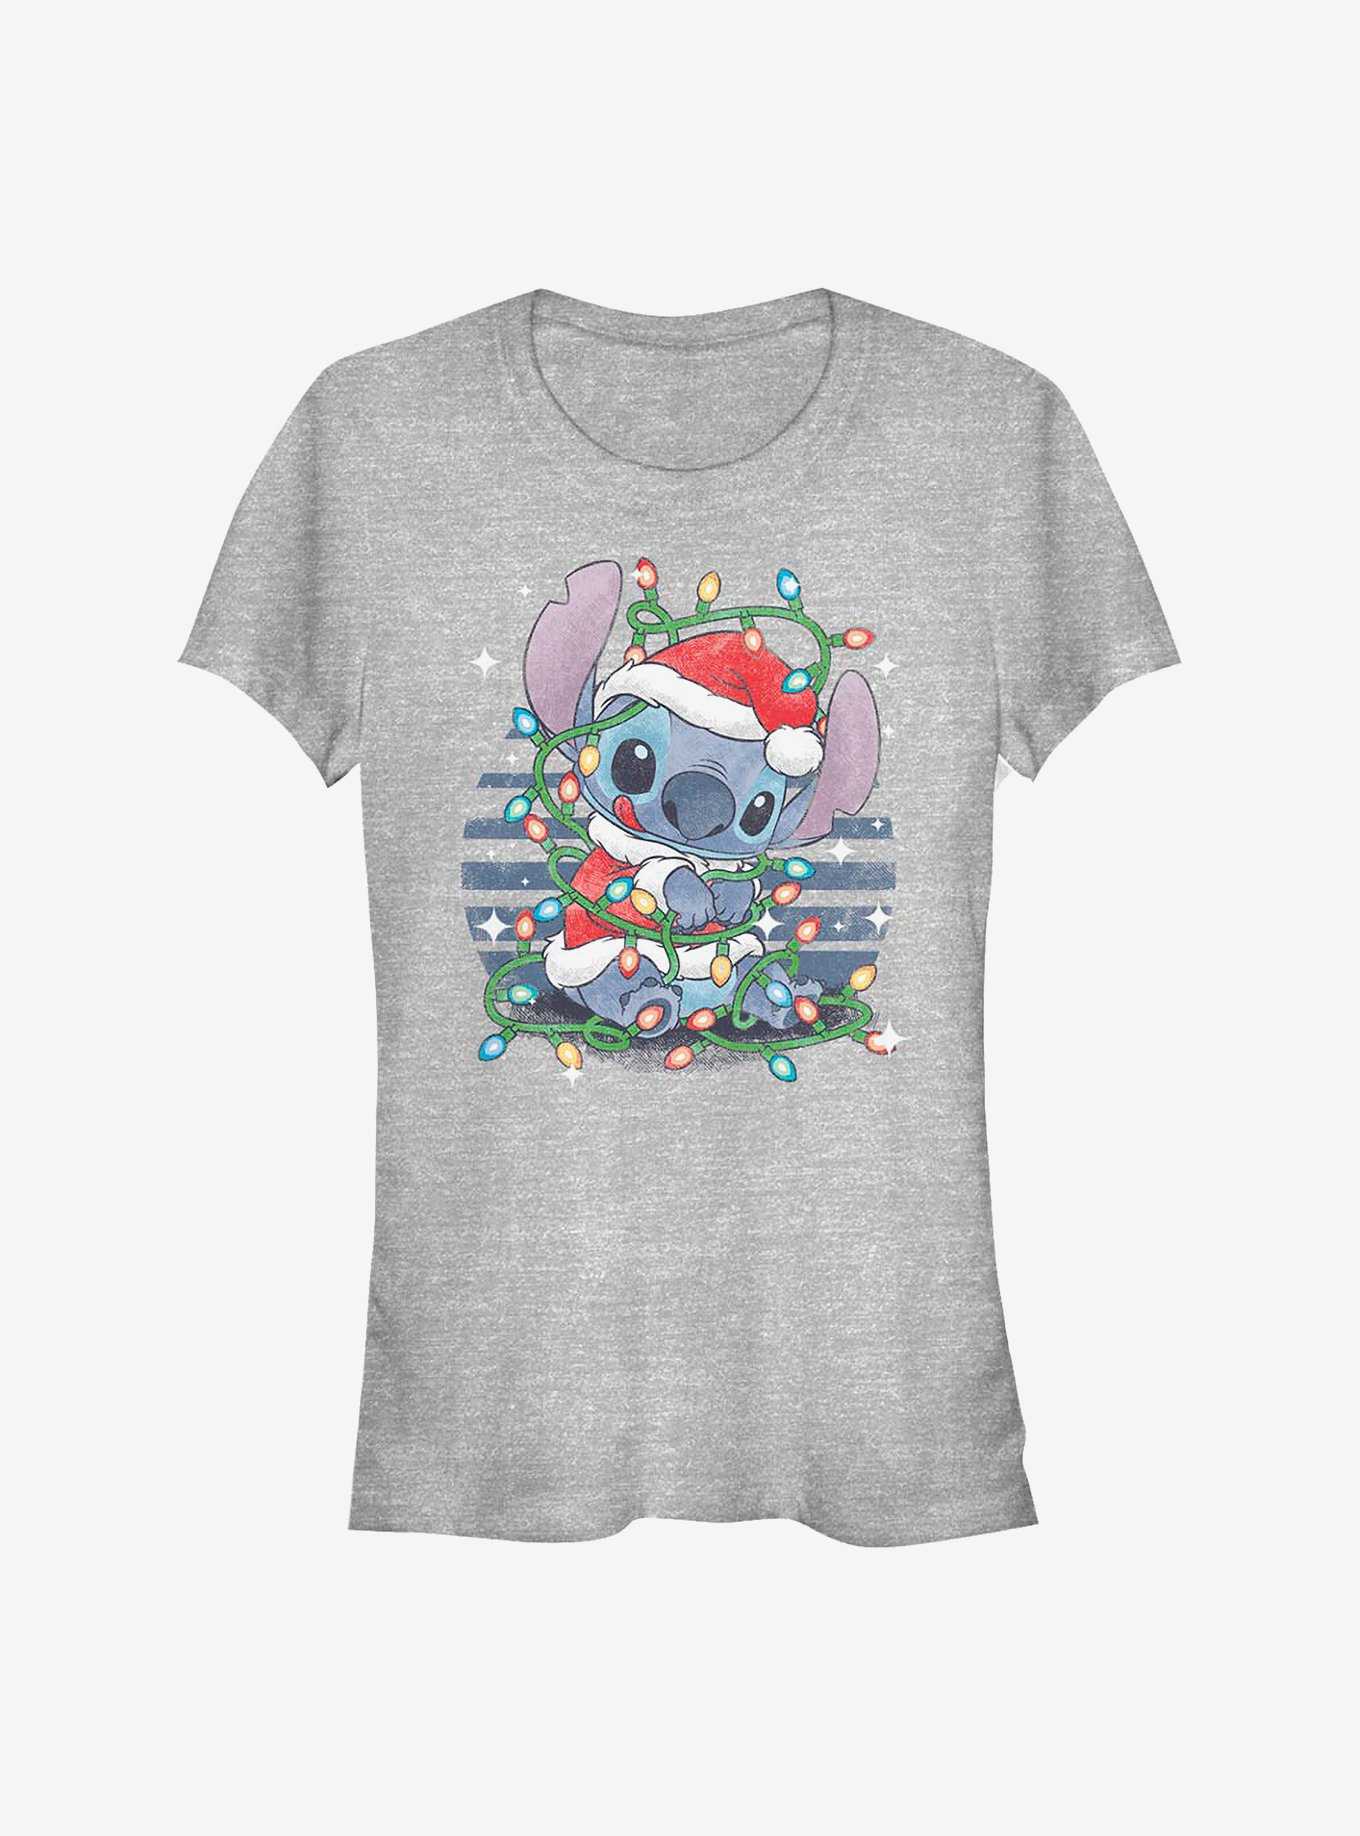 Disney Lilo & Stitch Holiday Lights Girls T-Shirt, , hi-res